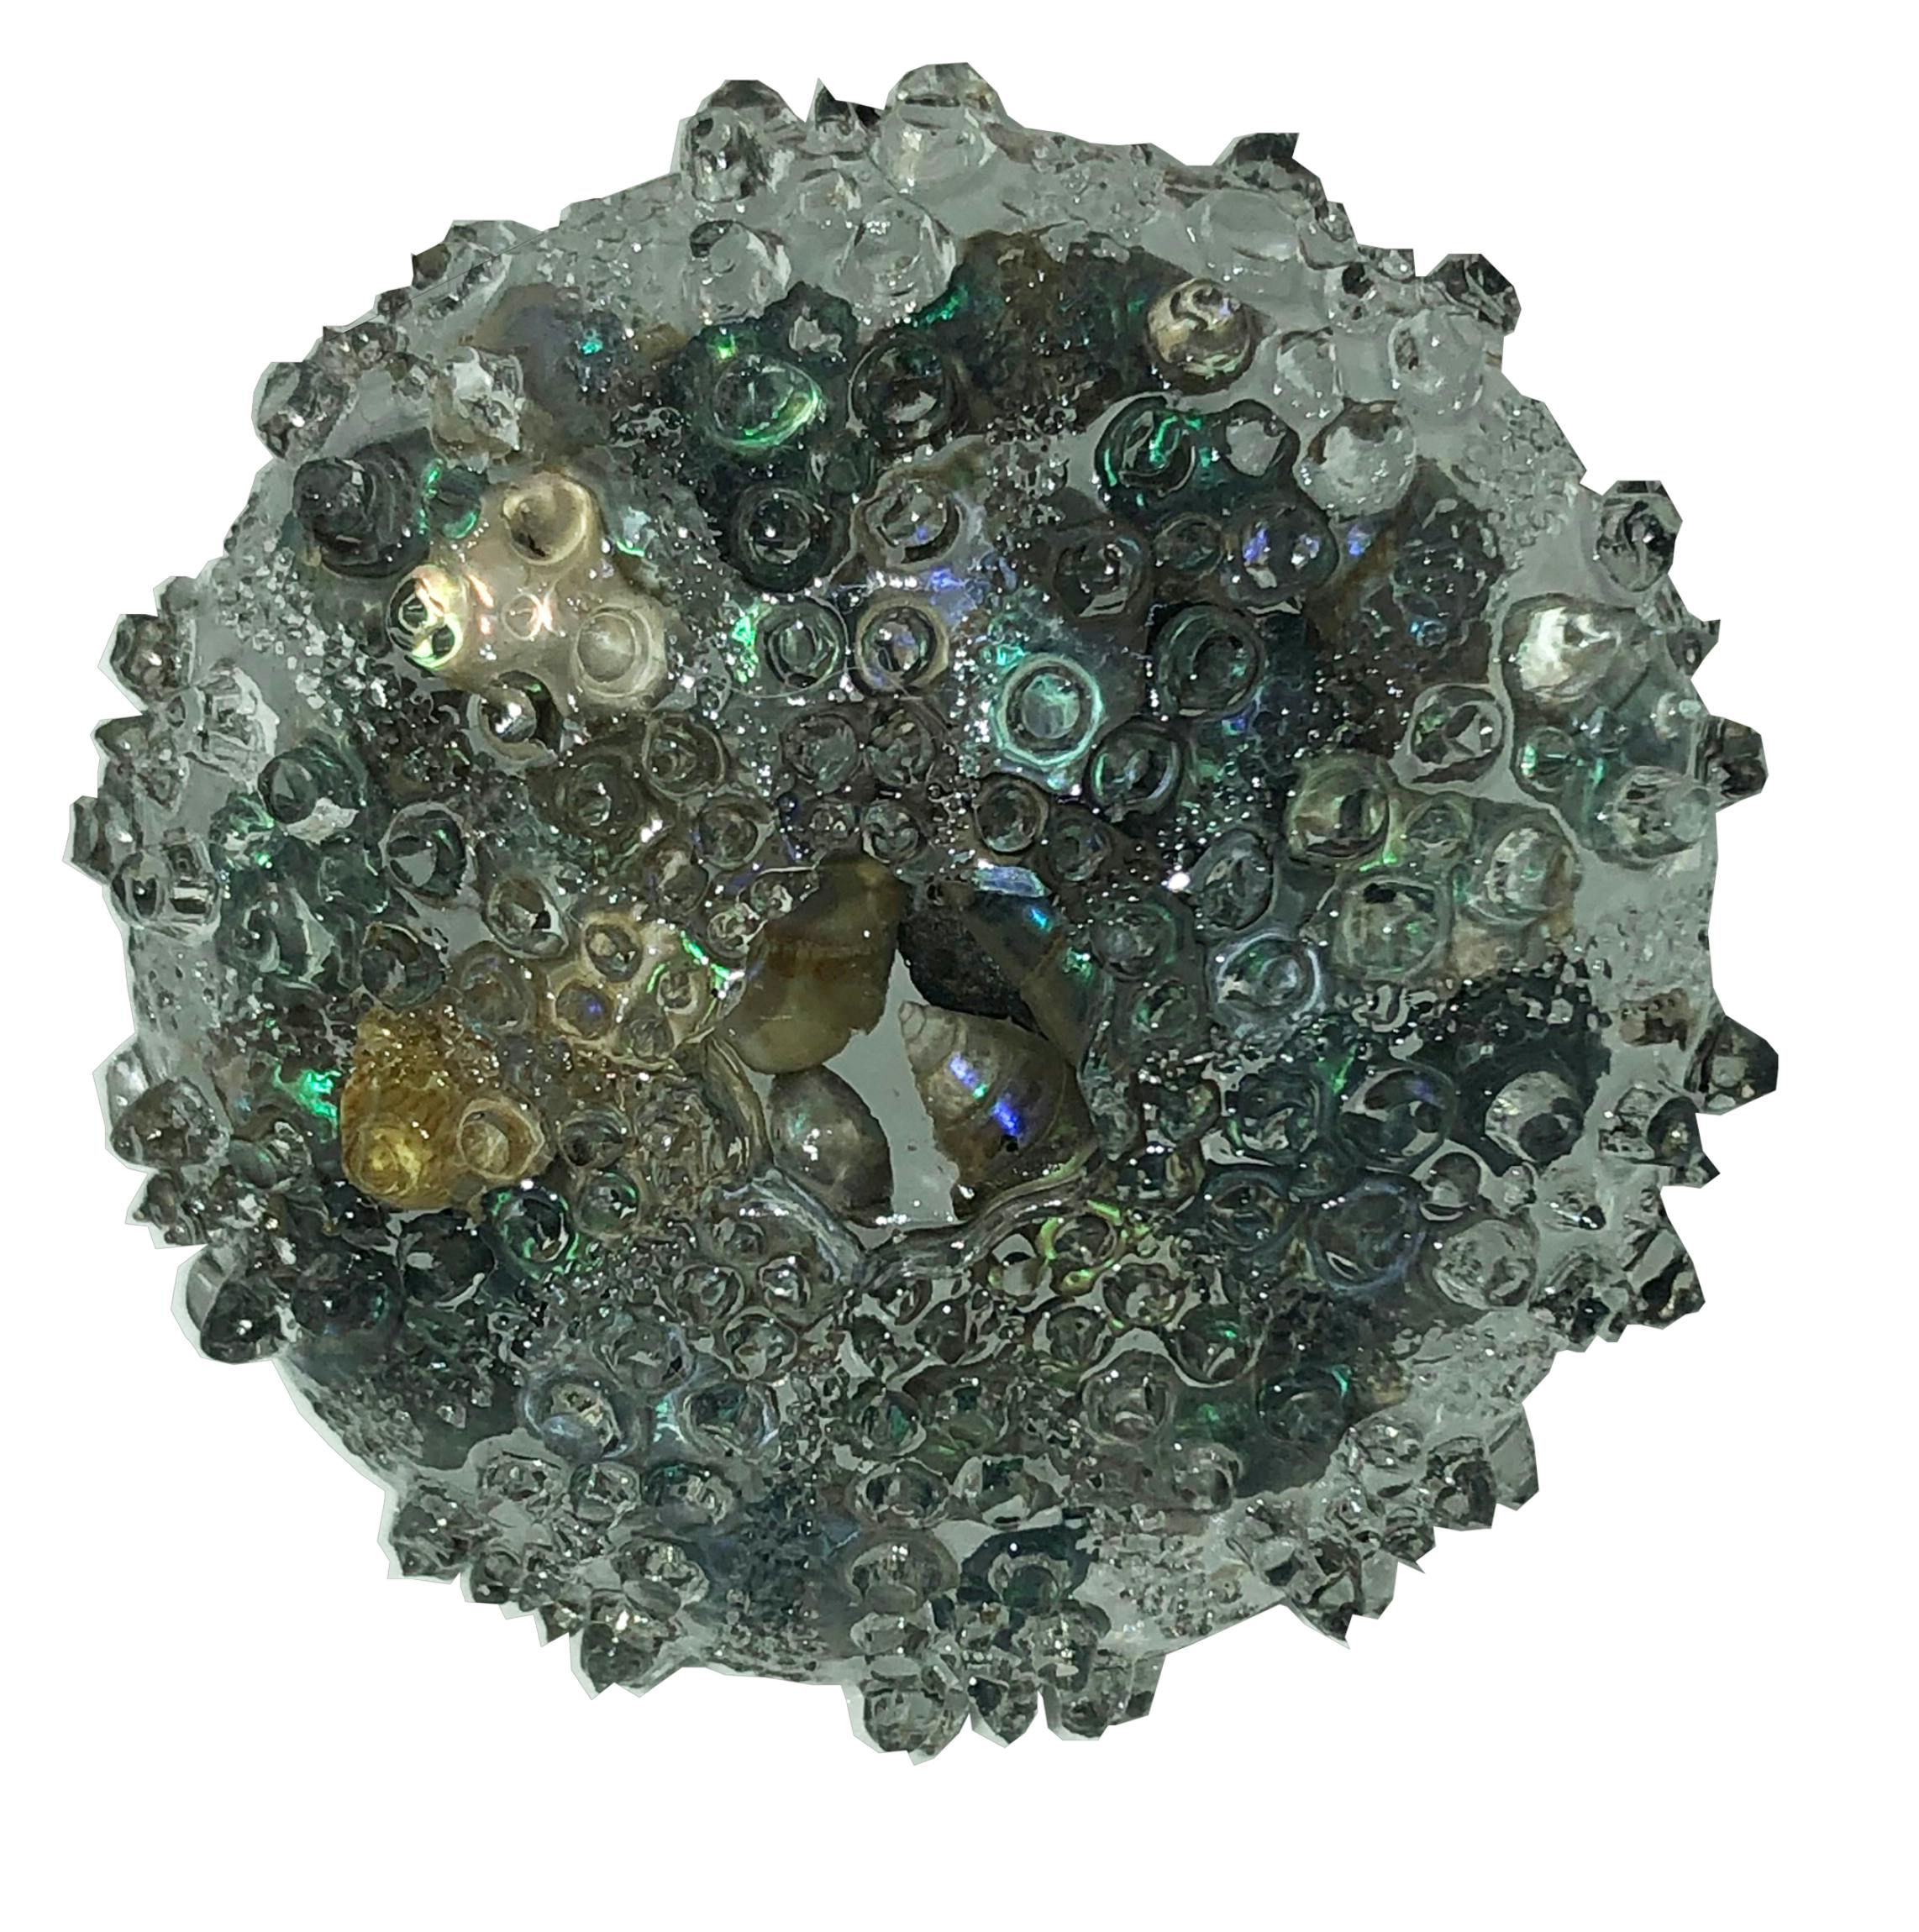 Resin Sea Urchin magnet featuring local miniature shells.